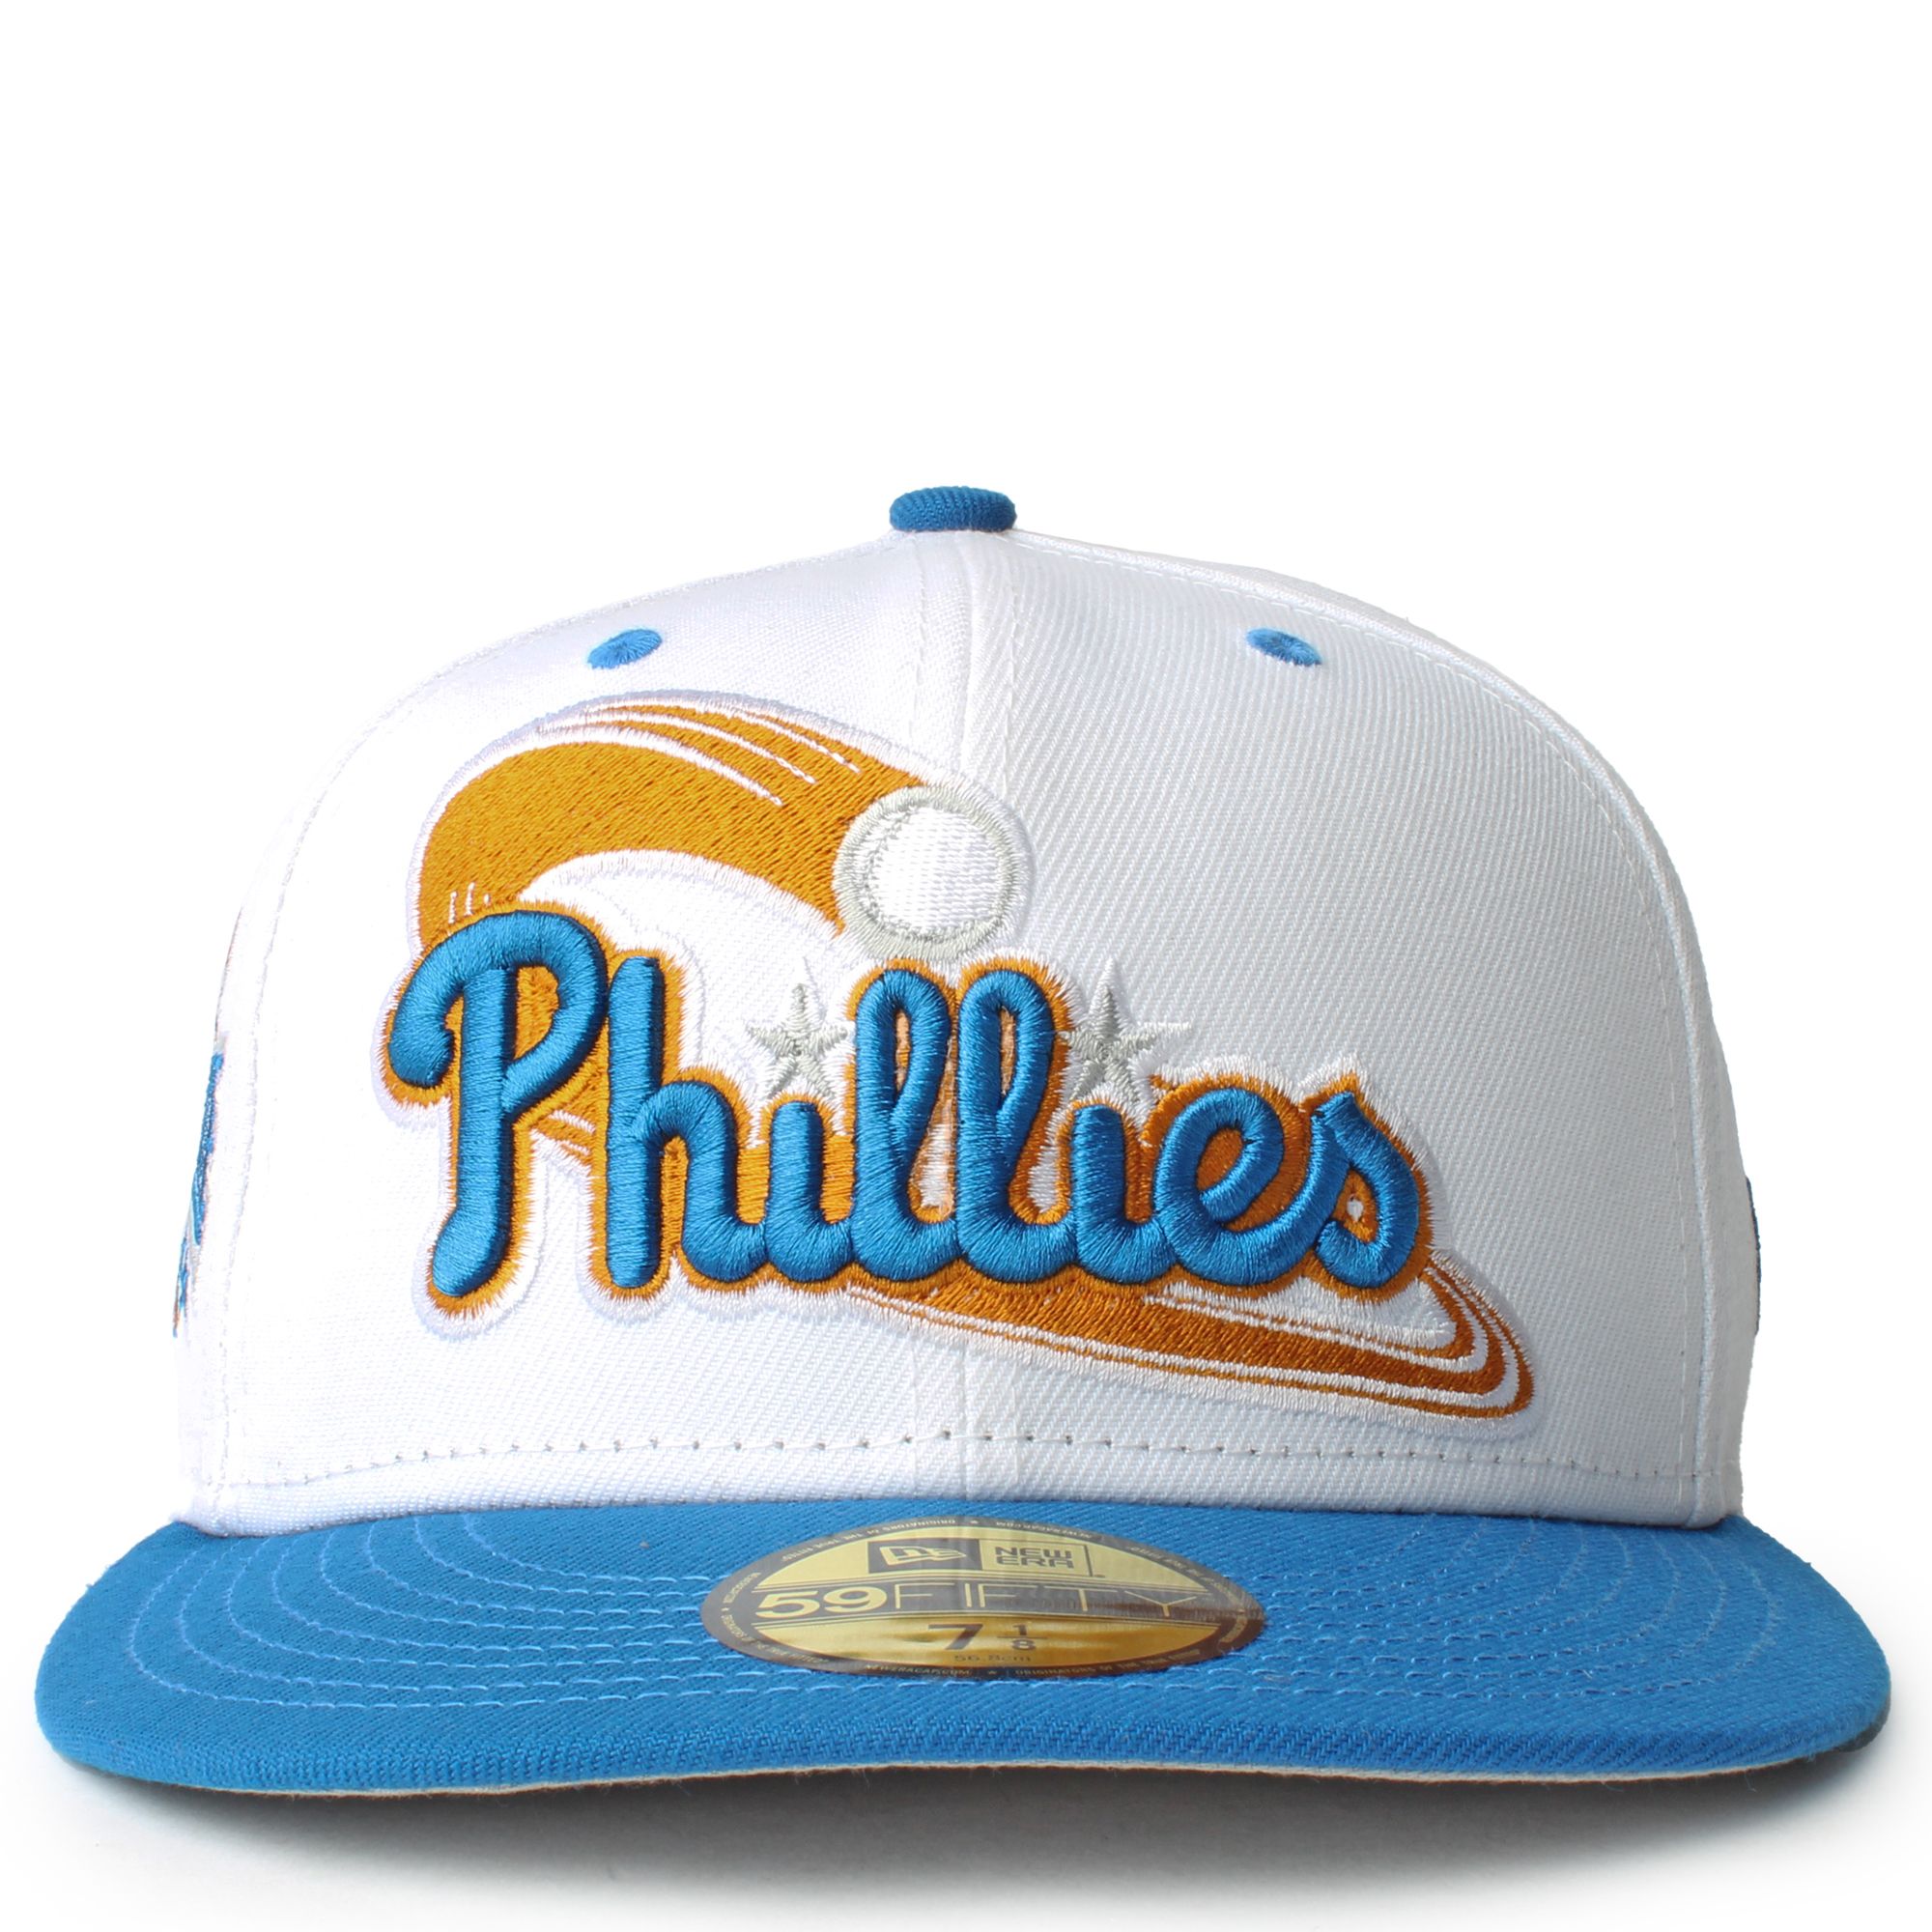 Men's Philadelphia Phillies Hats